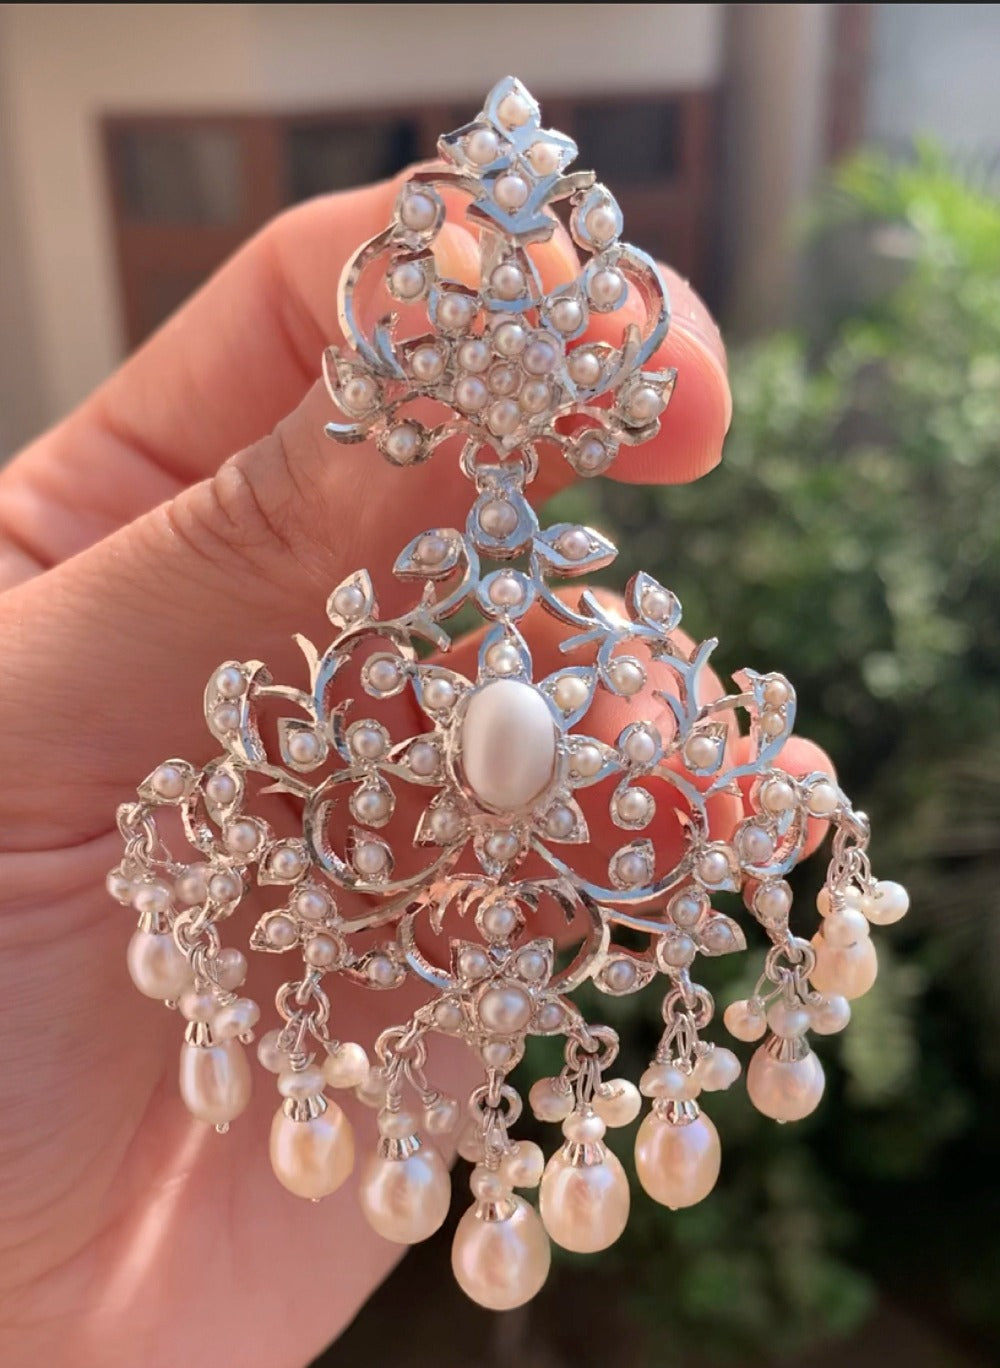 edwardian earrings with pearls